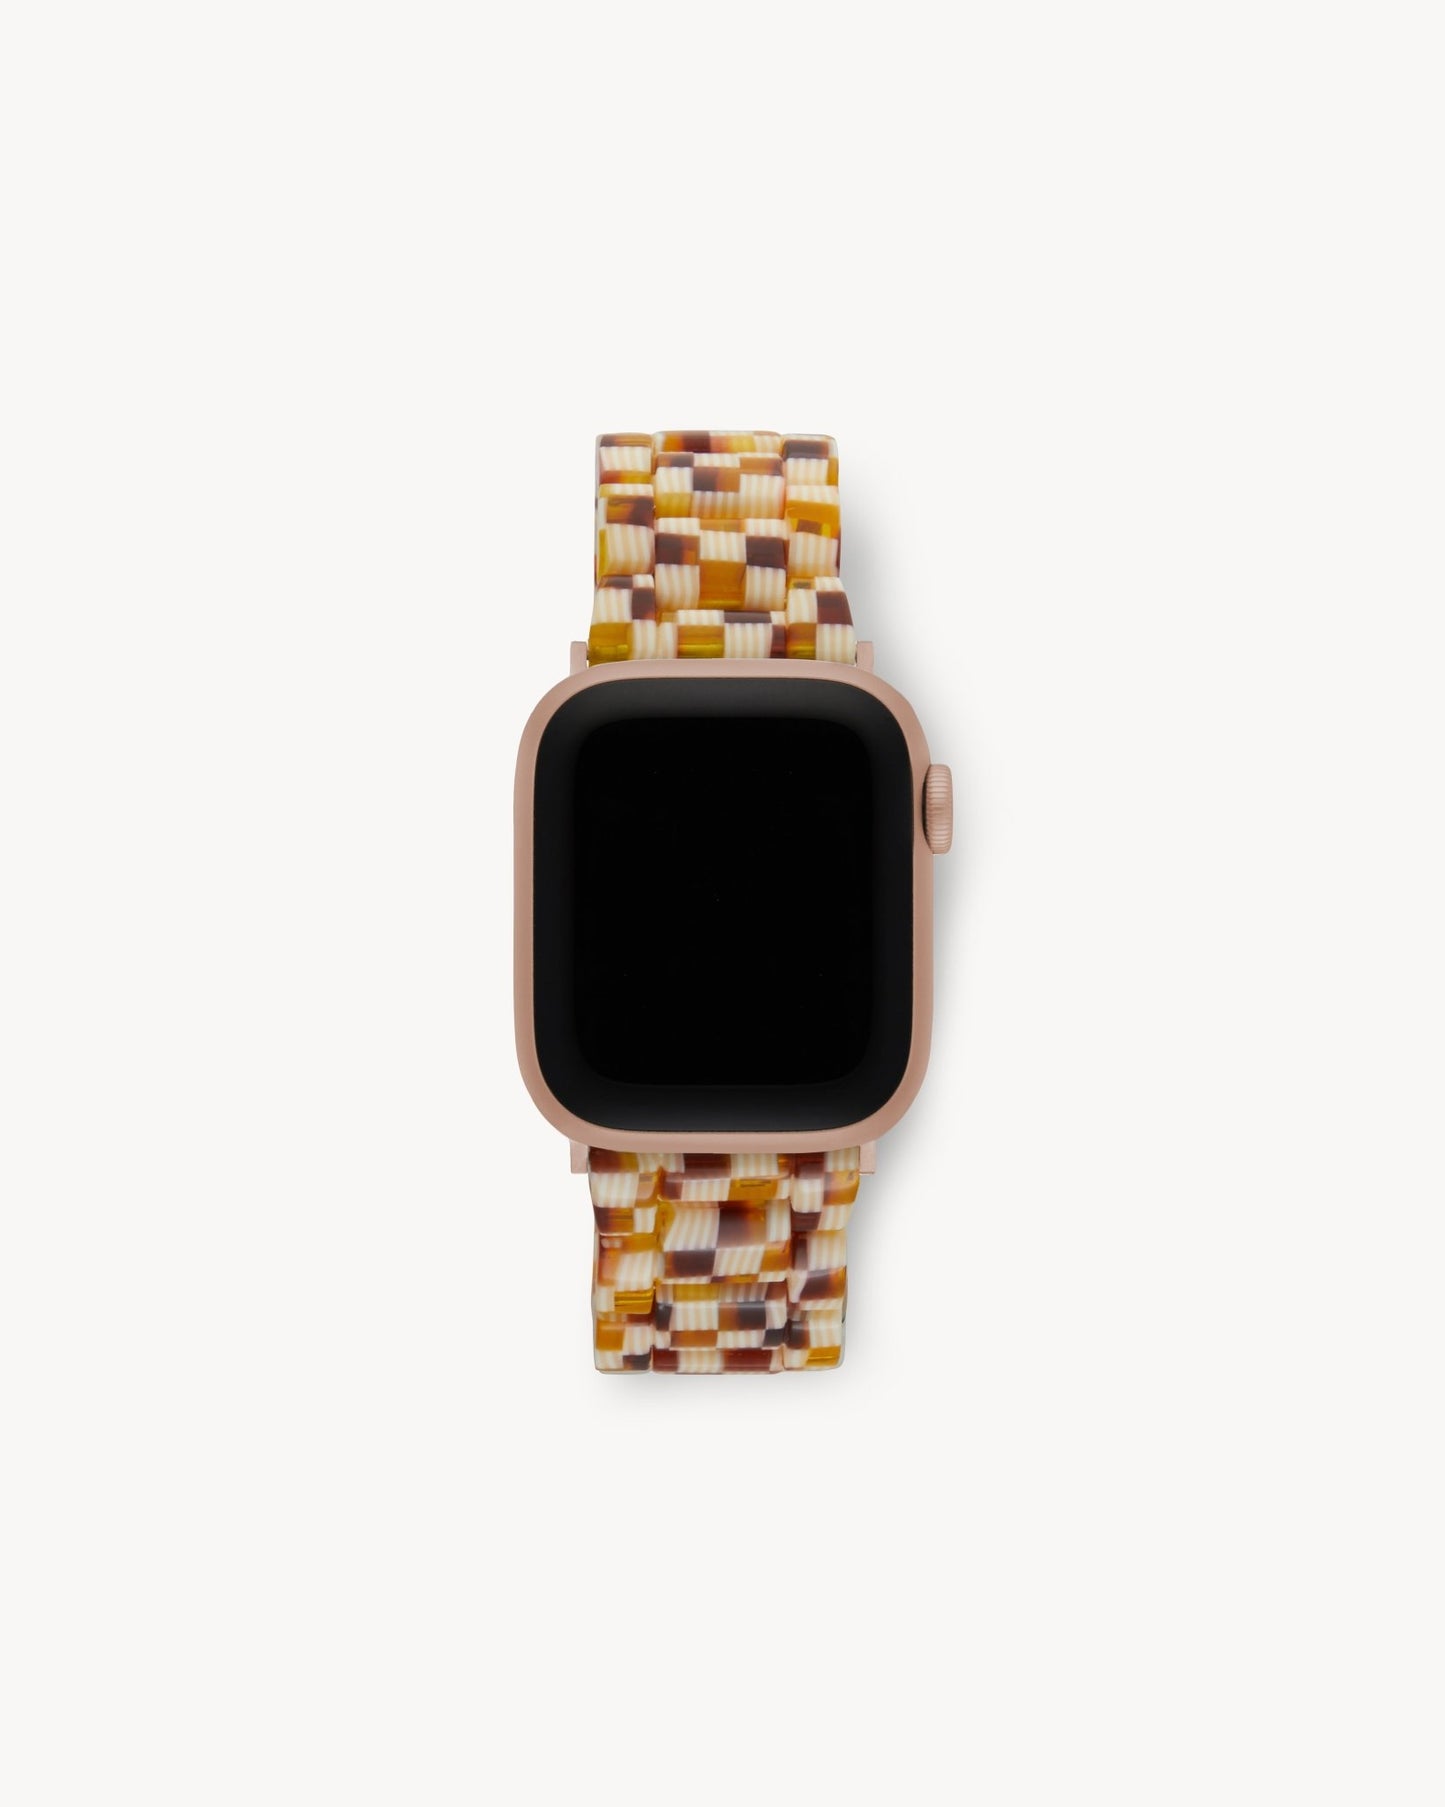 MACHETE Deluxe Apple Watch Band Set in Tortoise Checker 